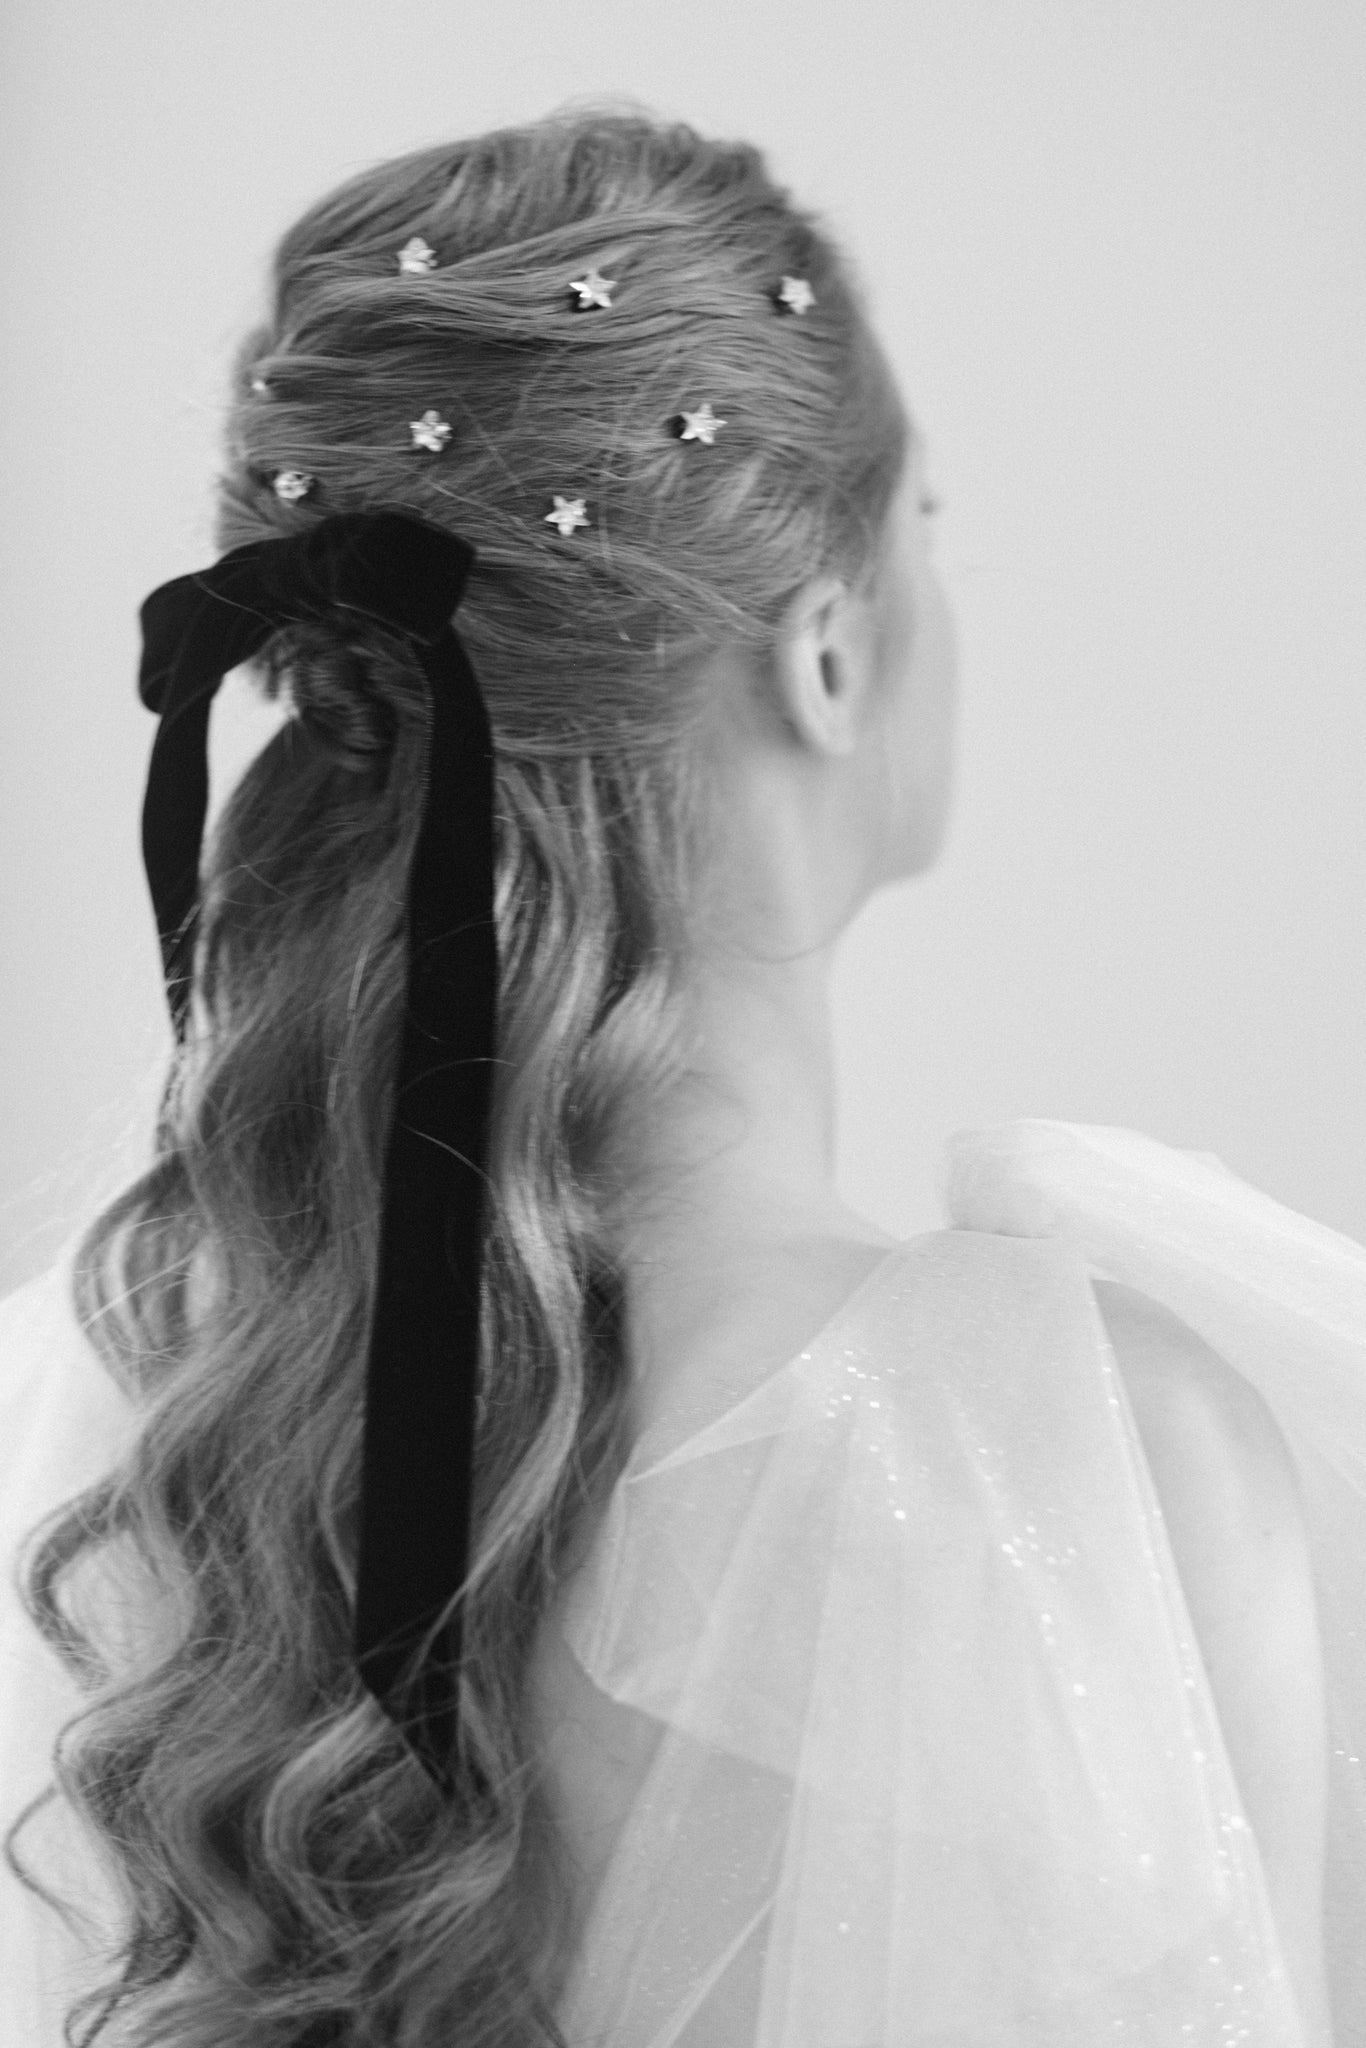 Black velvet bow with star hair pins